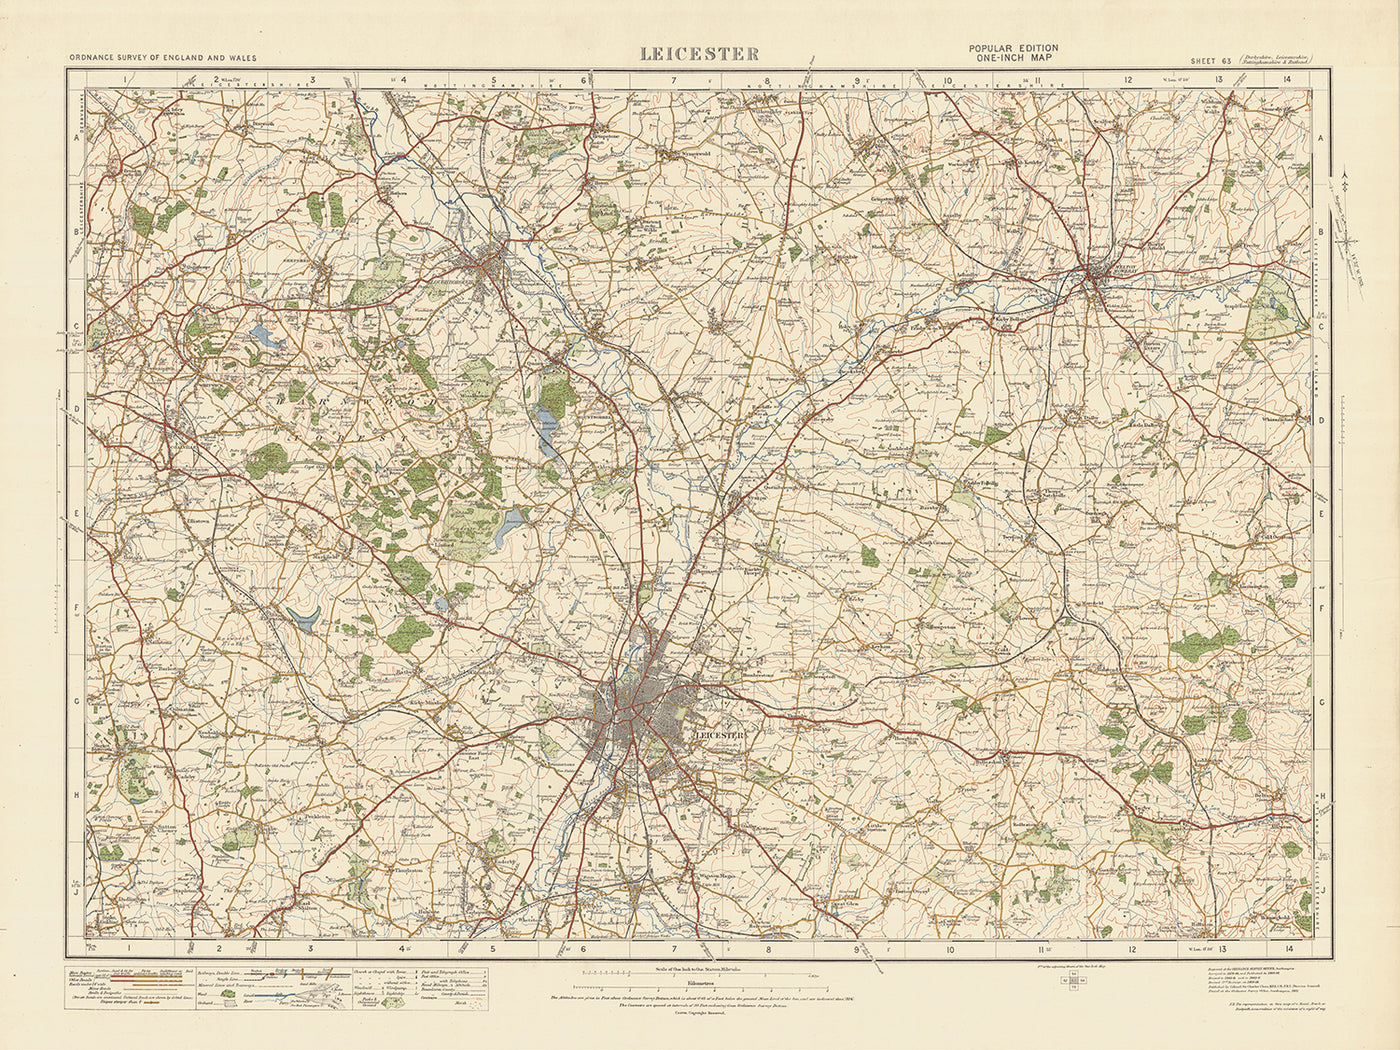 Old Ordnance Survey Map, Sheet 63 - Leicester, 1925: Loughborough, Coalville, Melton Mowbray, Wigston, Shepshed